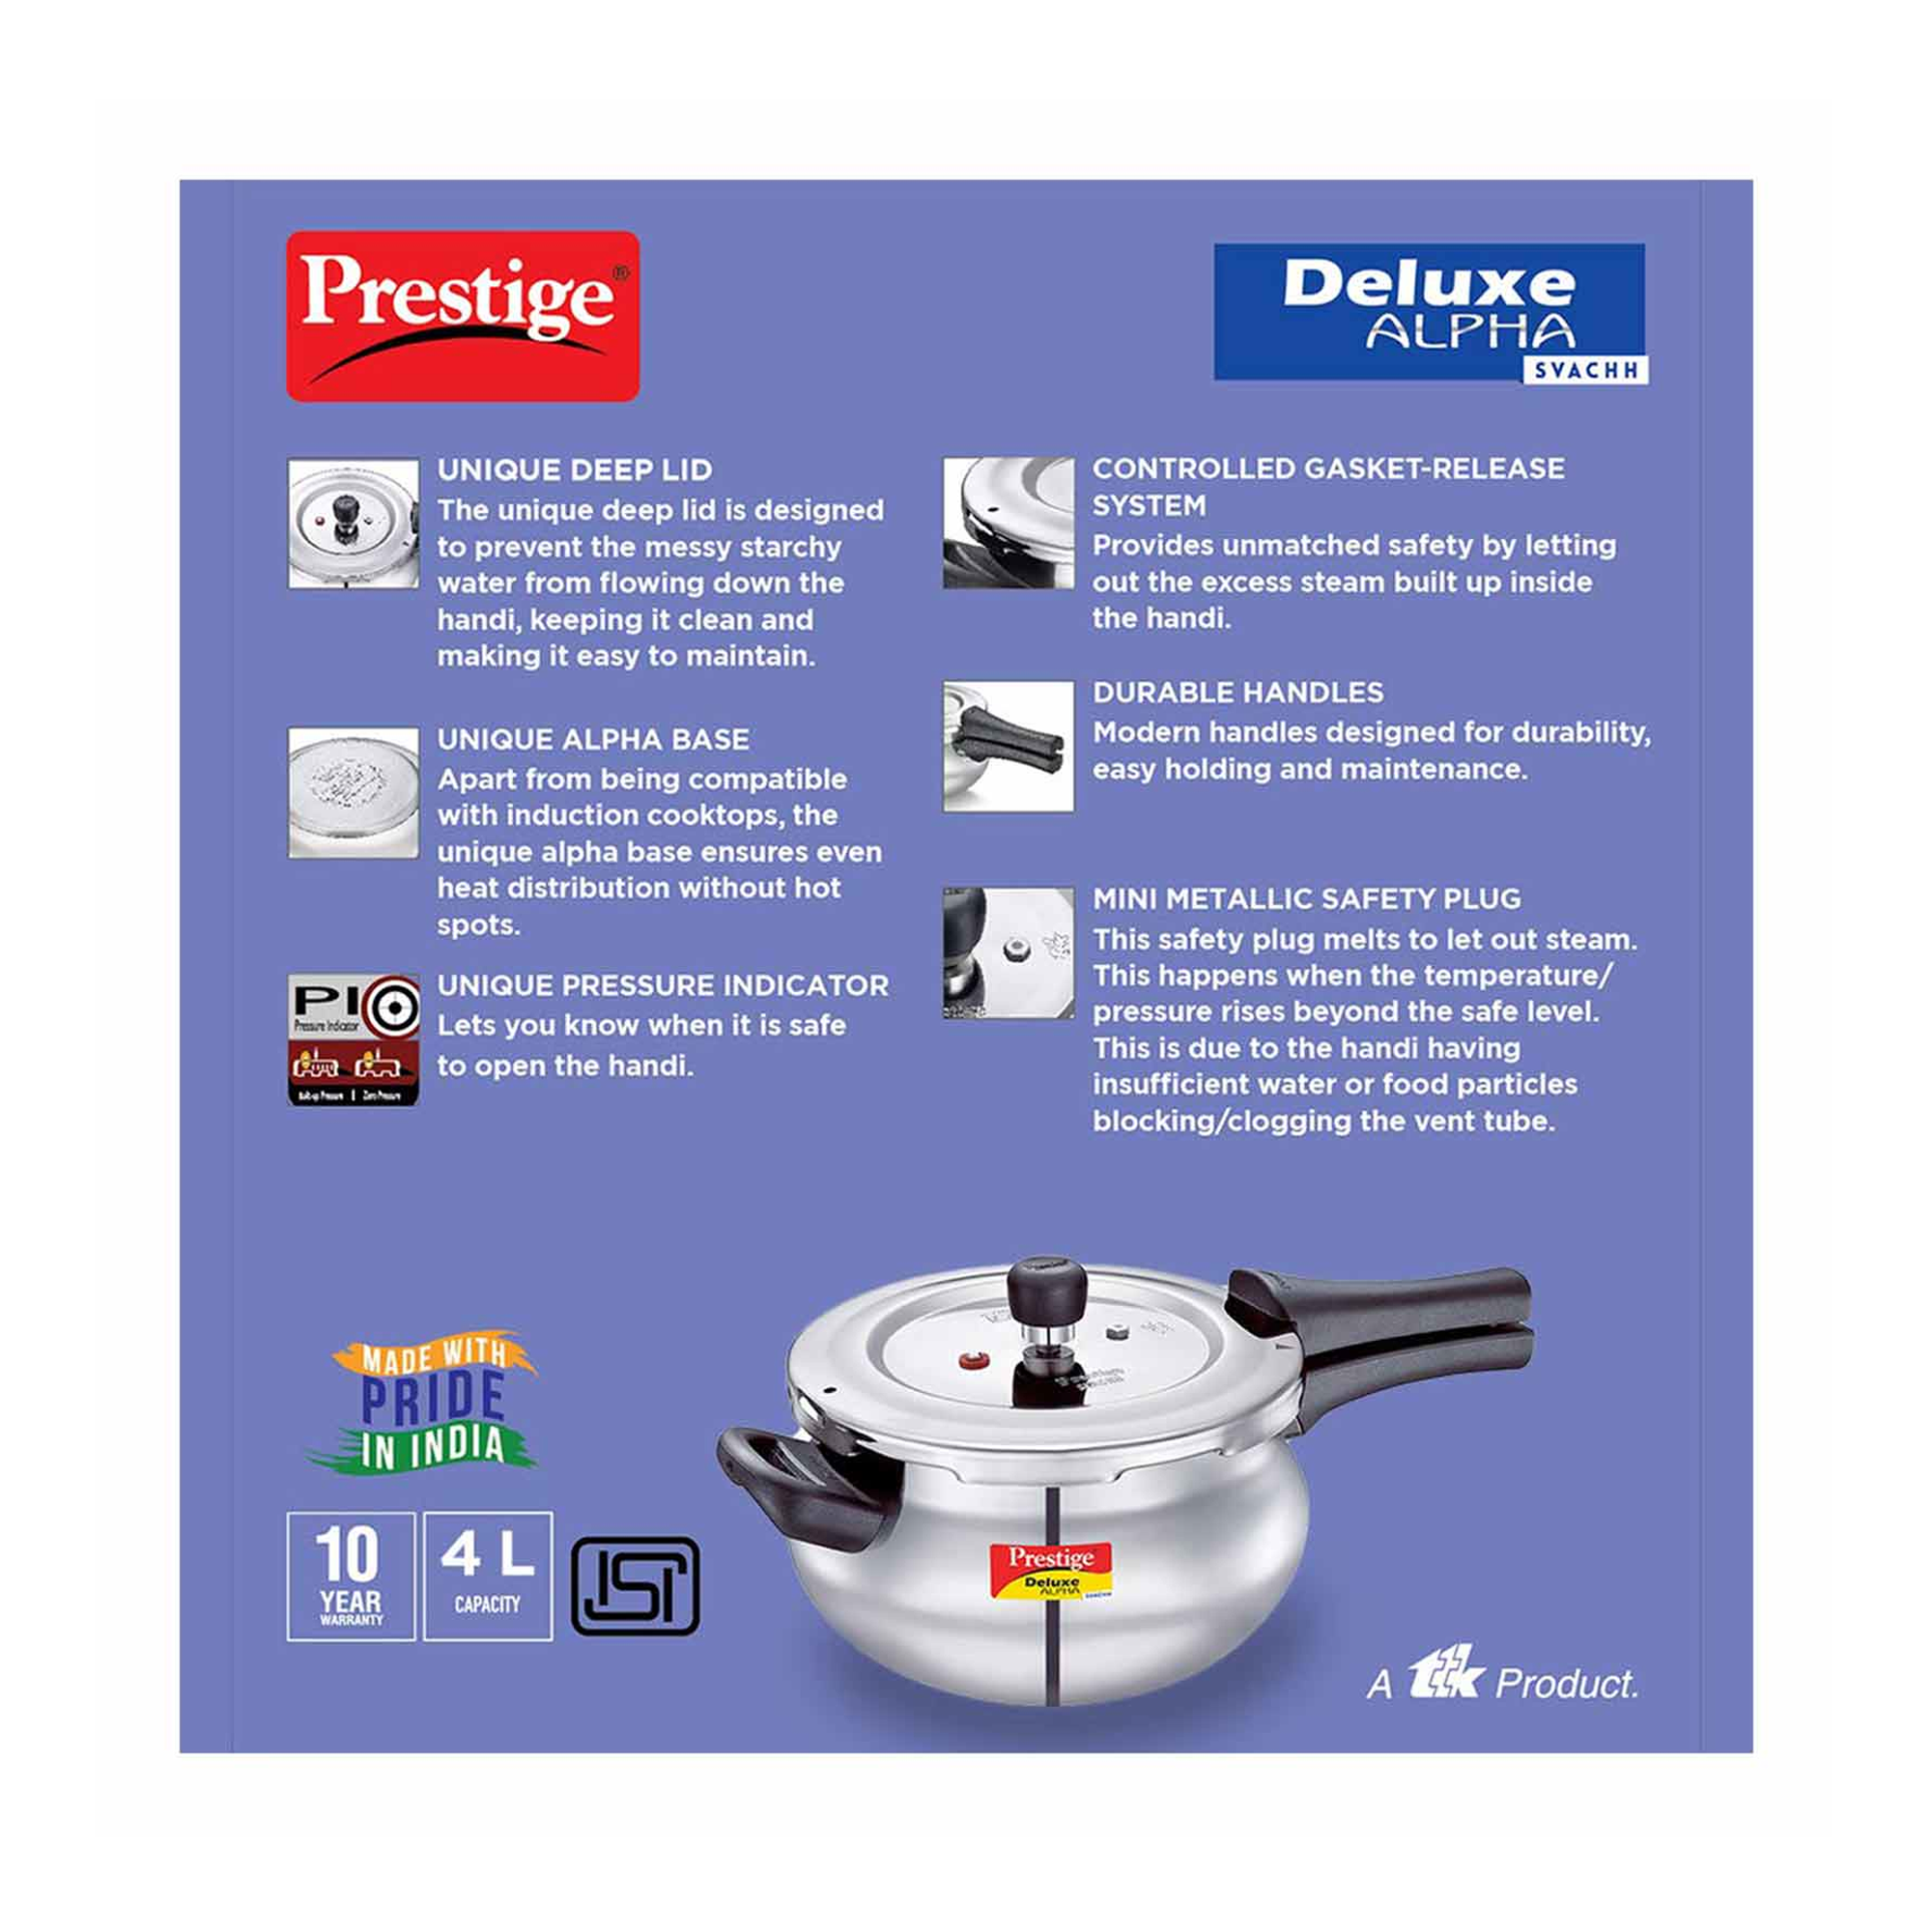 Prestige 4L Alpha Deluxe Induction Base Stainless Steel Pressure Cooker 4.0-liter